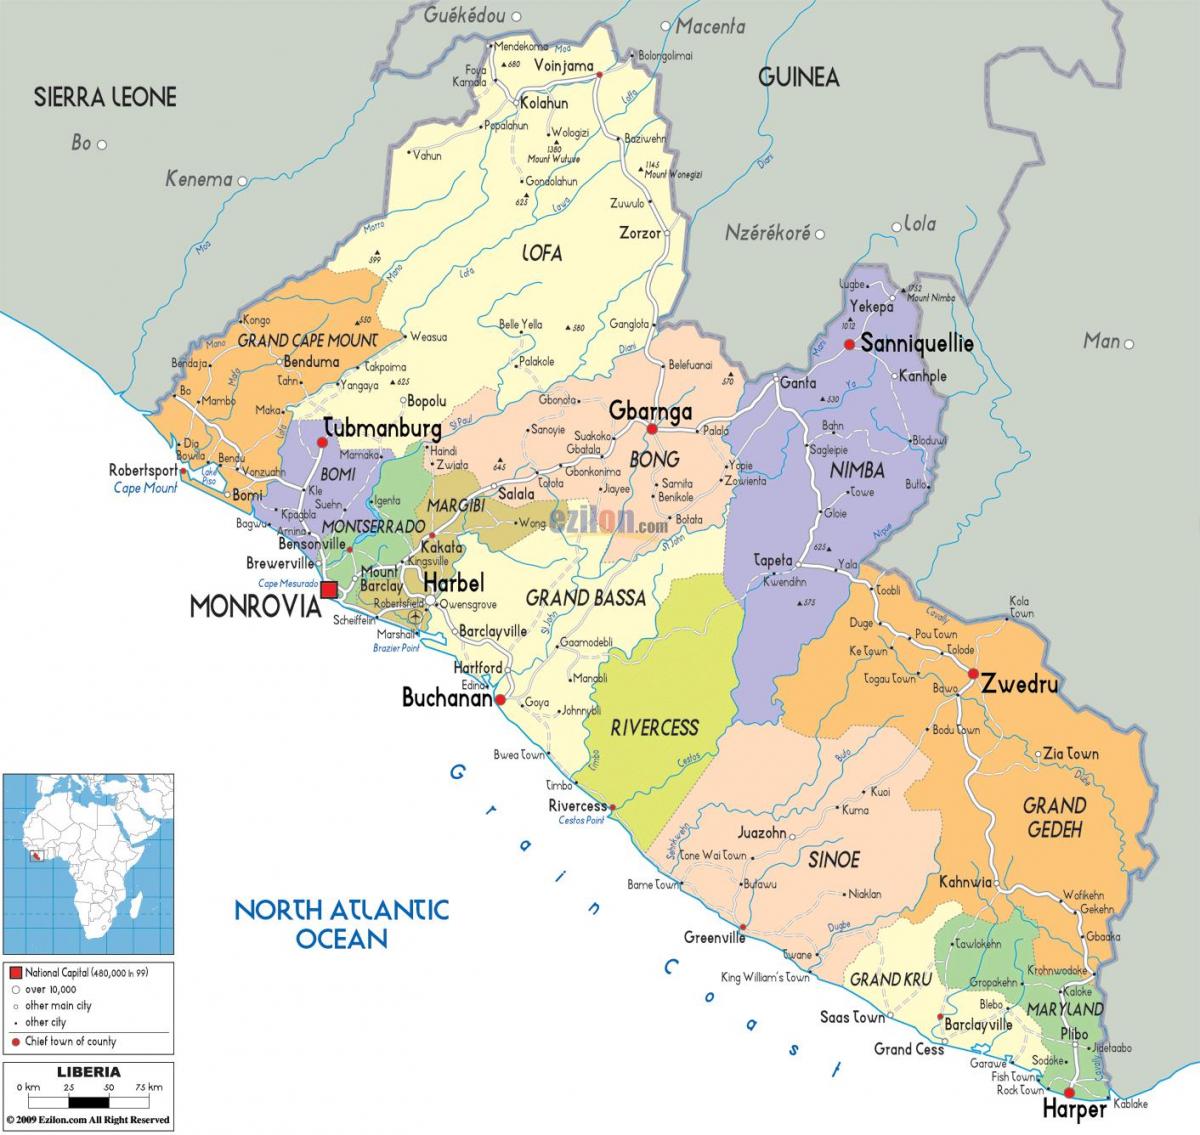 نقشه سیاسی کشور لیبریا